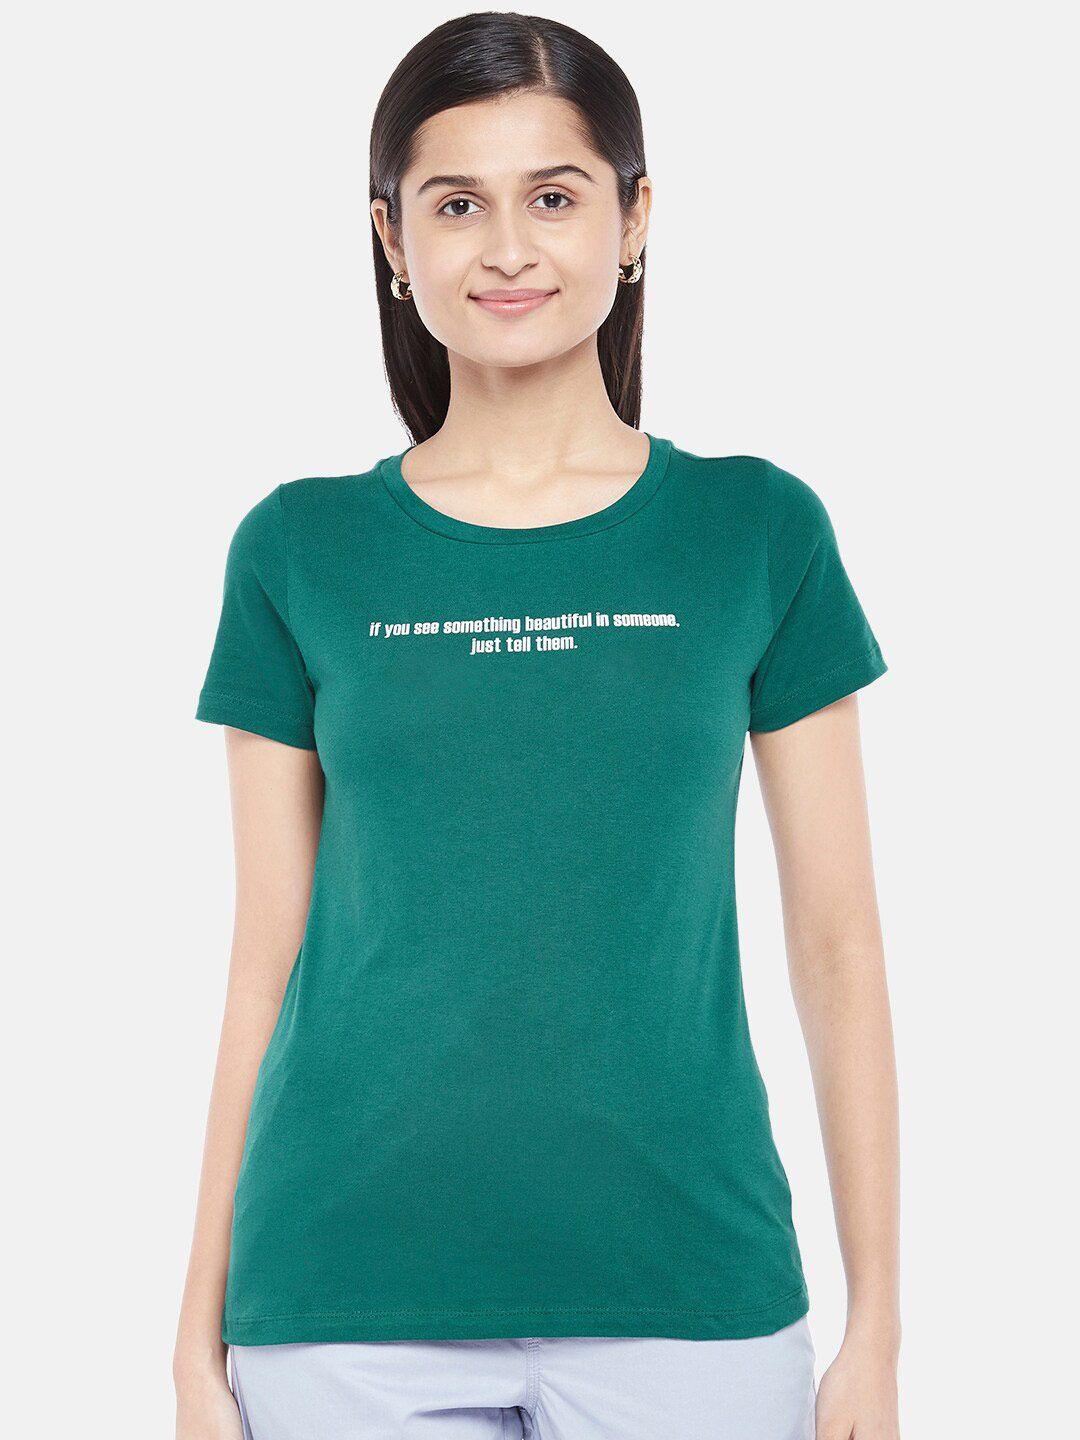 honey by pantaloons women teal green typography printed t-shirt